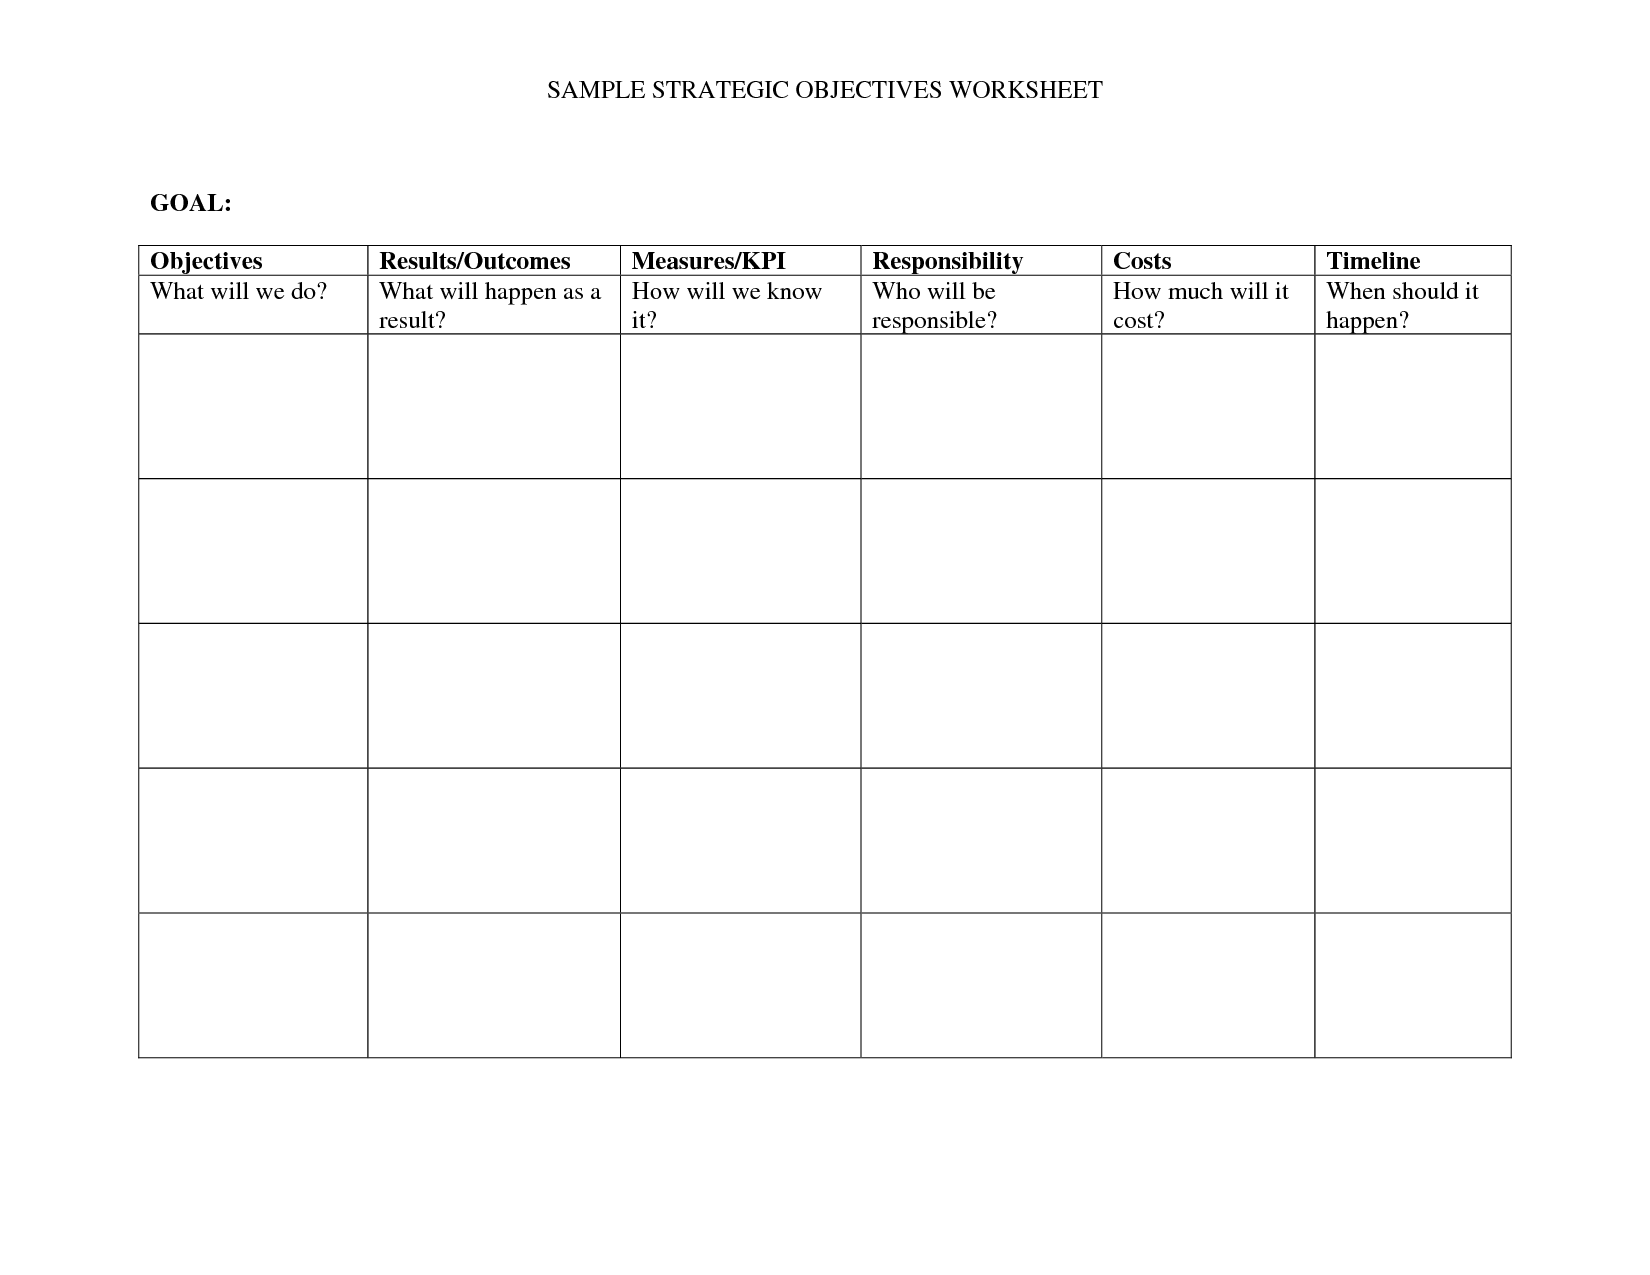 Goals and Objectives Worksheet Image